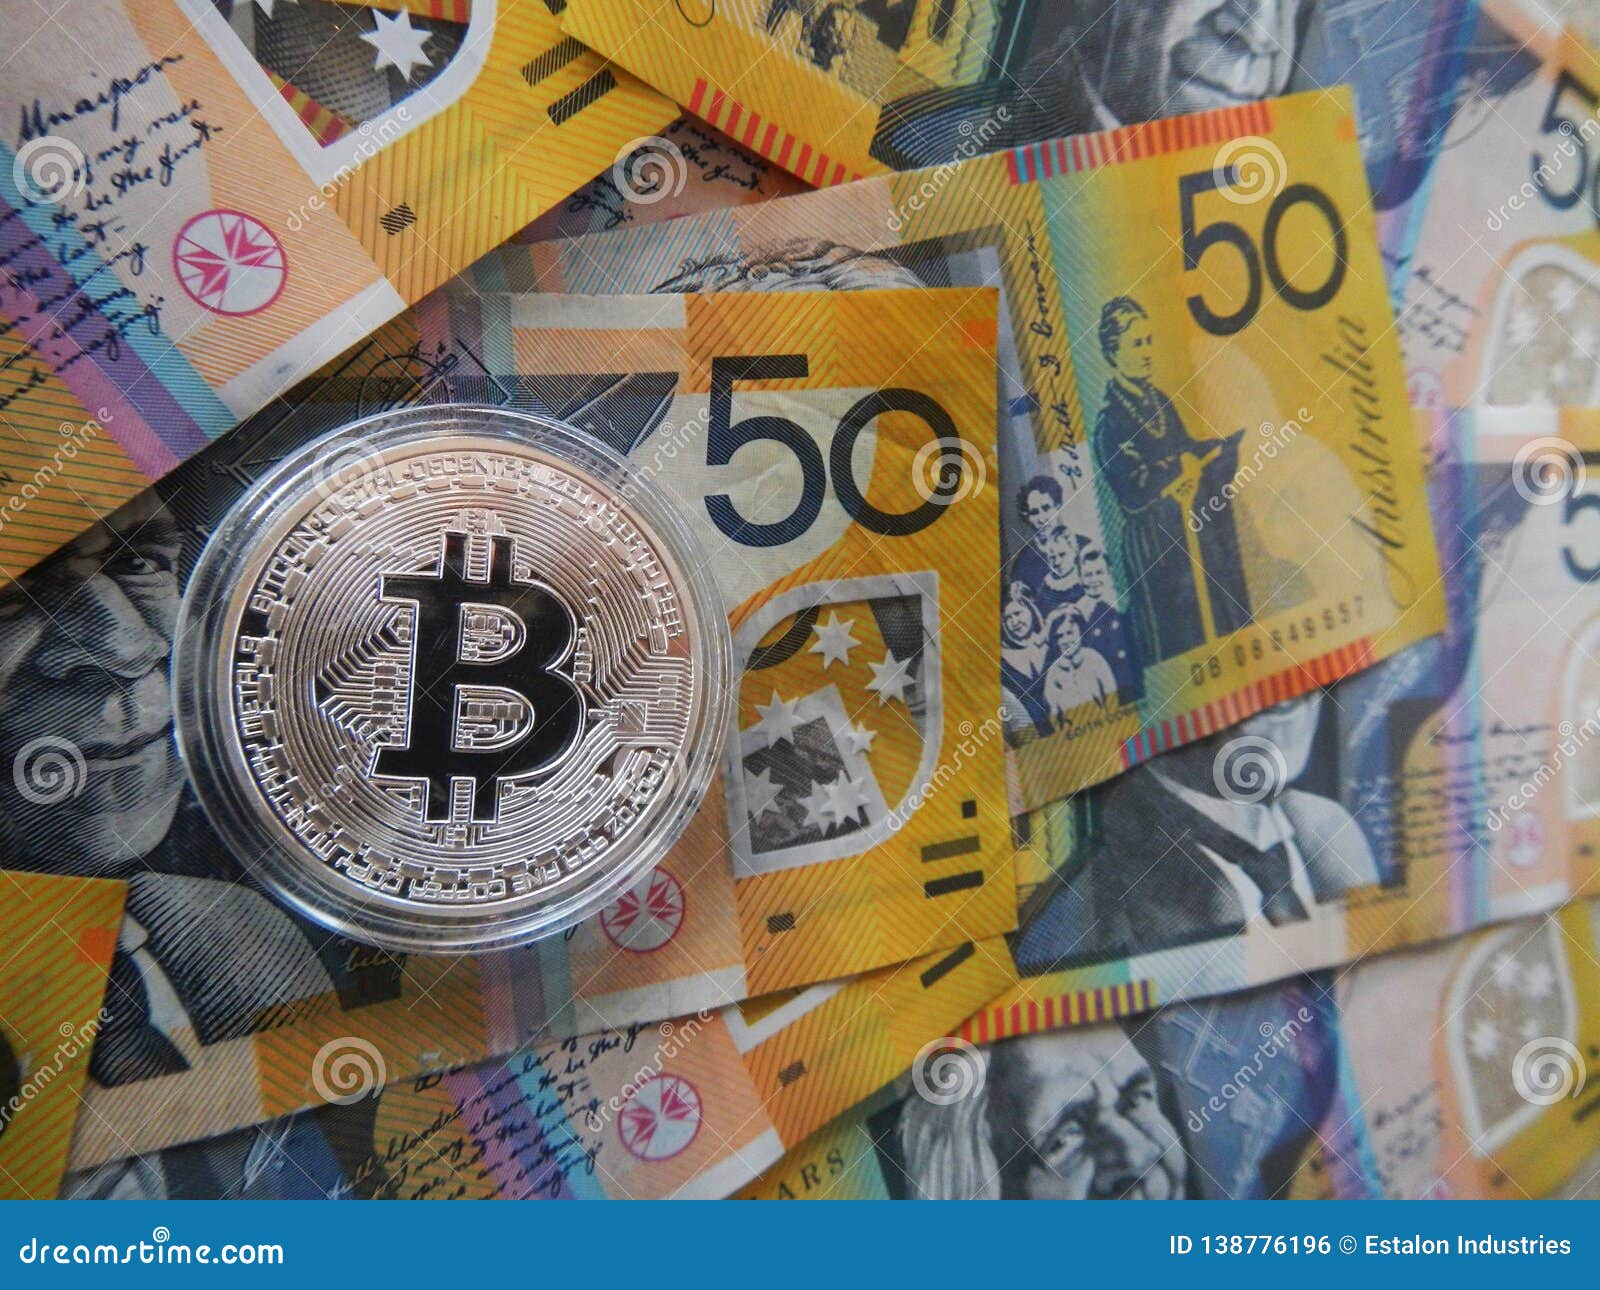 Cash To Bitcoin Australia / Binance Opens Cash To Bitcoin ...